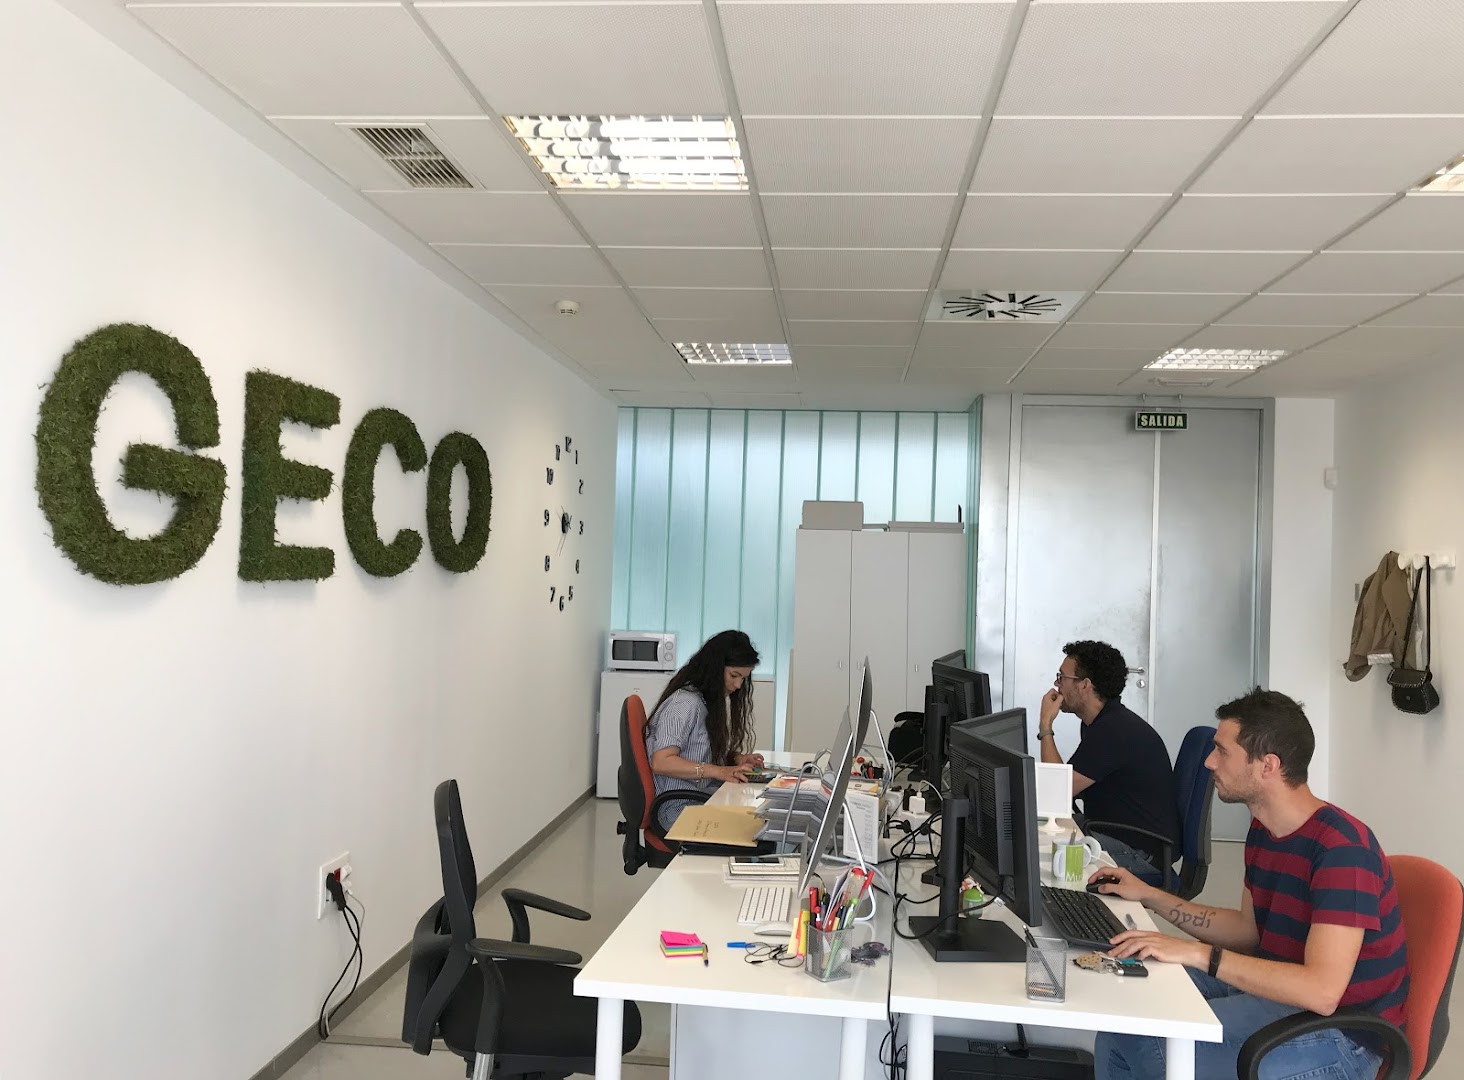 The Geco Company